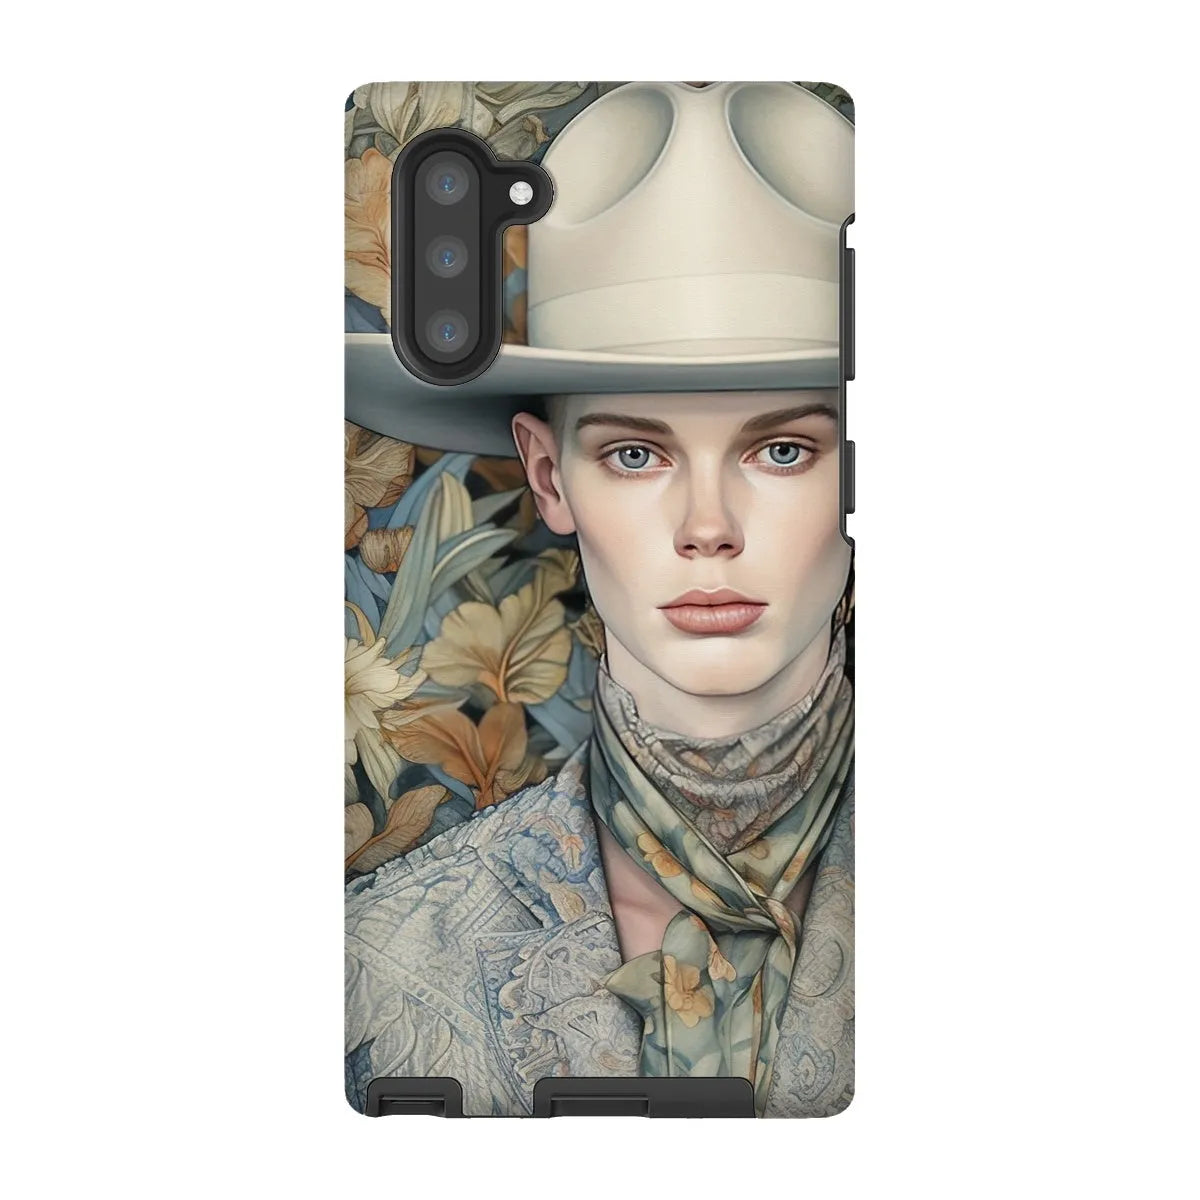 Jasper - Dandy Twink Cowboy Aesthetic Art Phone Case - Samsung Galaxy Note 10 / Matte - Mobile Phone Cases - Aesthetic